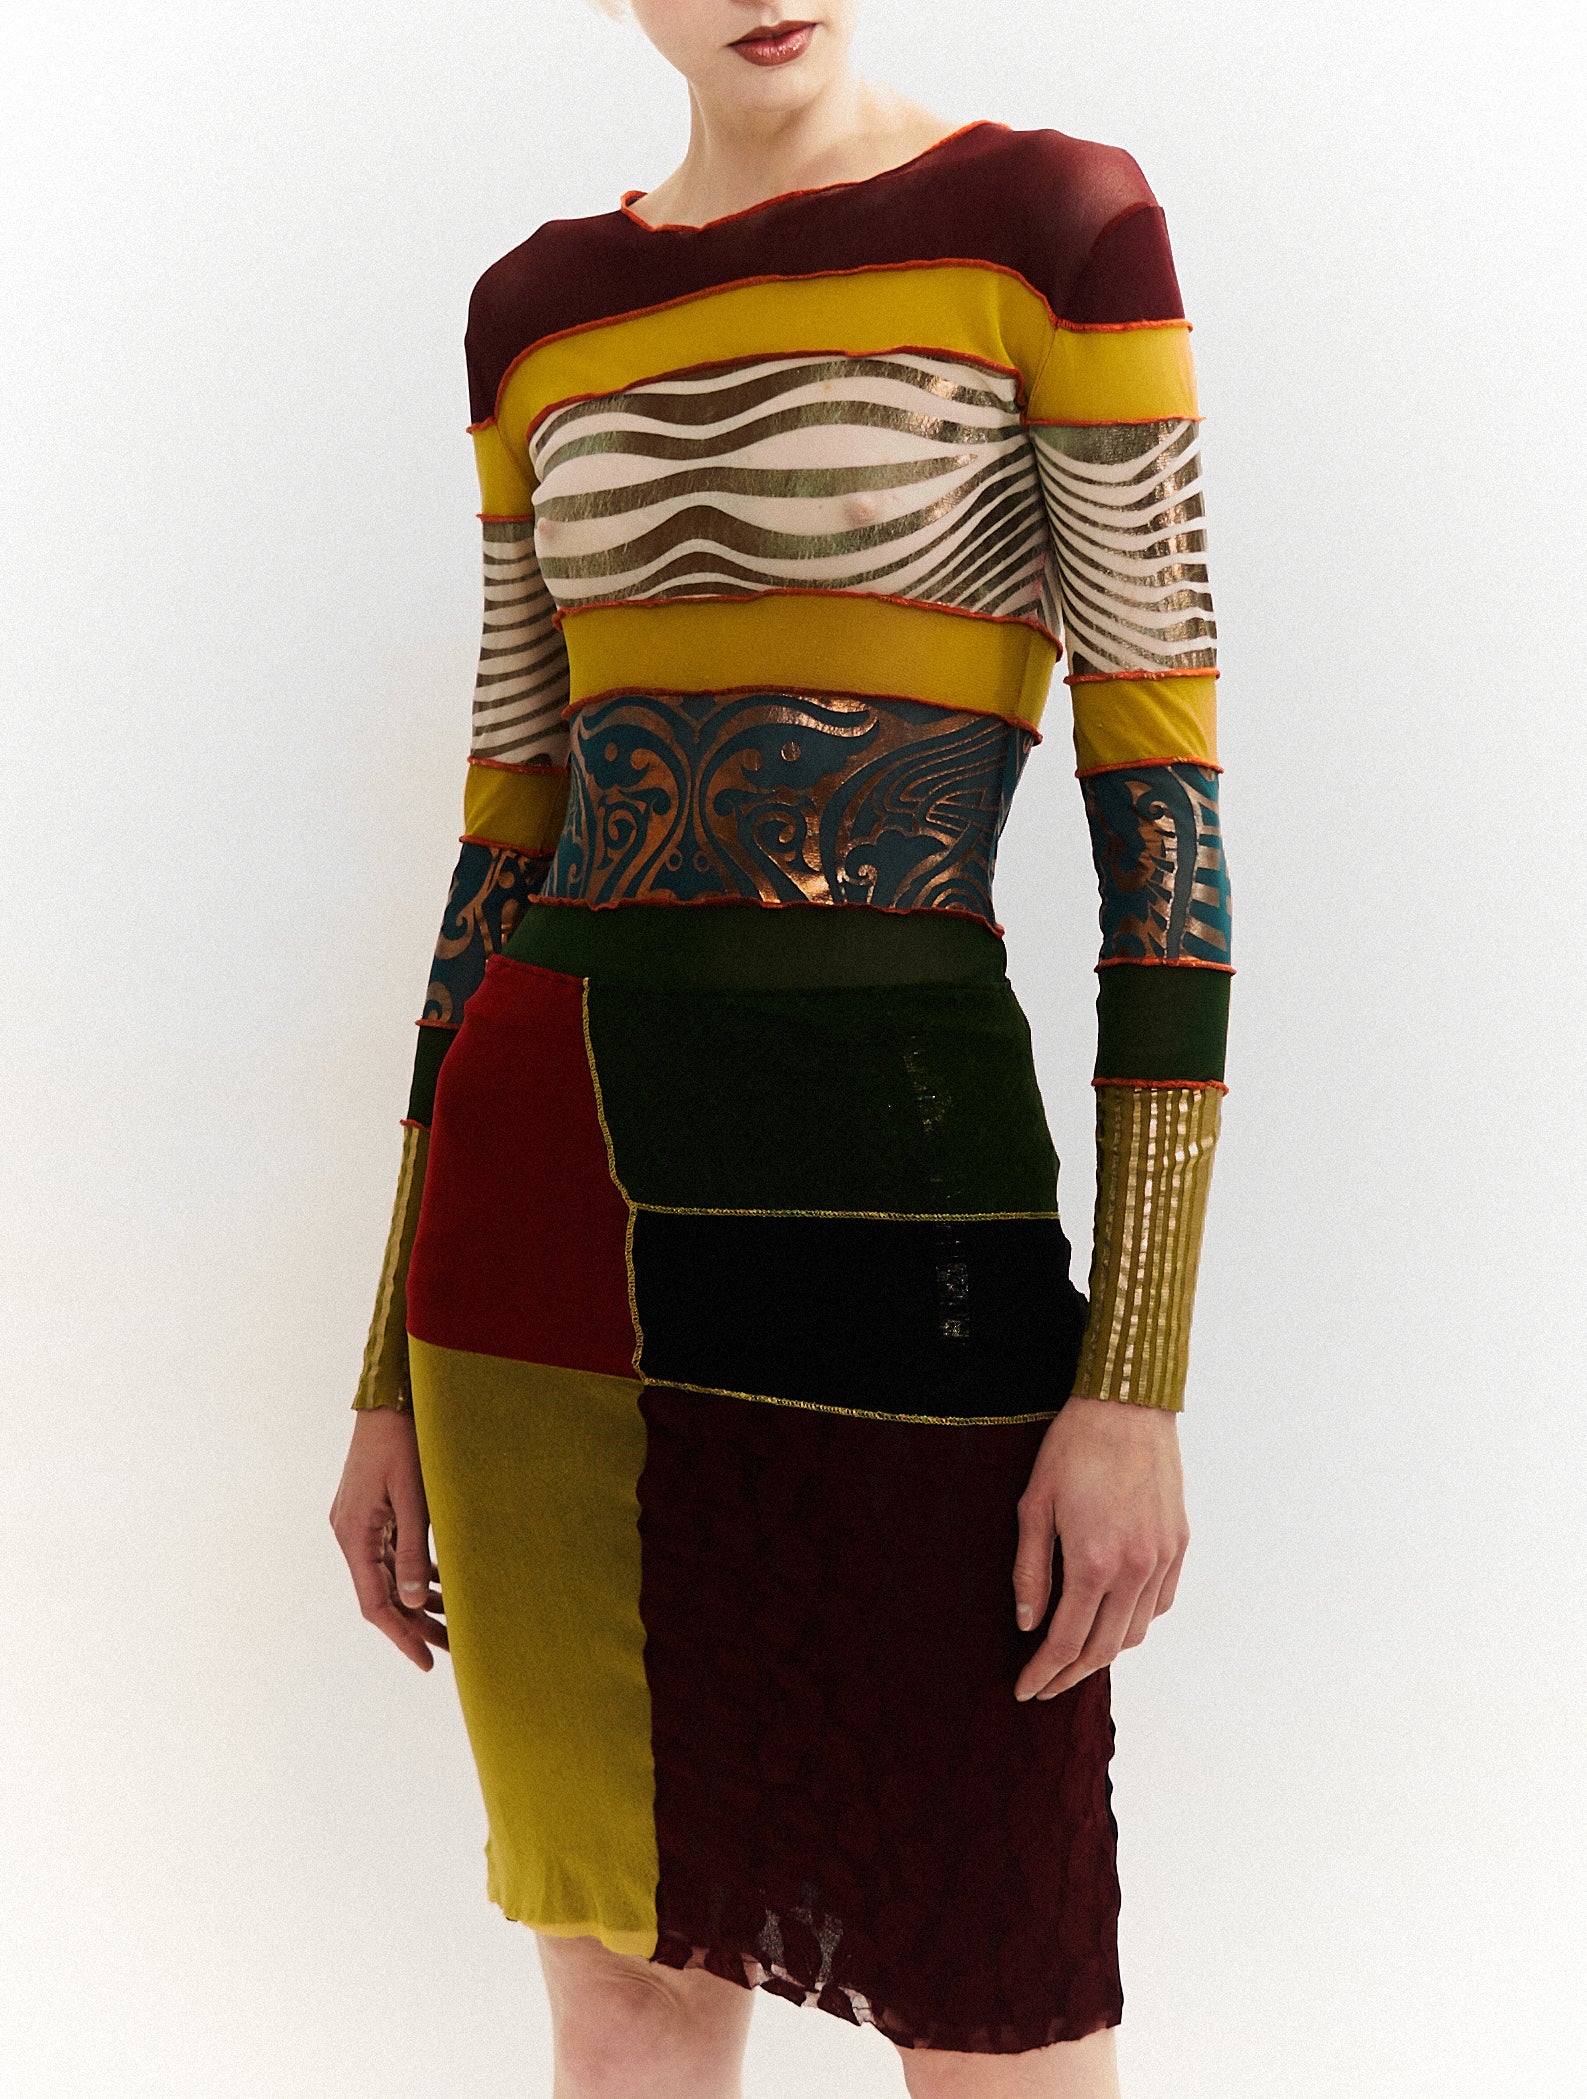 Jean Paul Gaultier <br> S/S 1996 Cyberbaba top & skirt ensemble